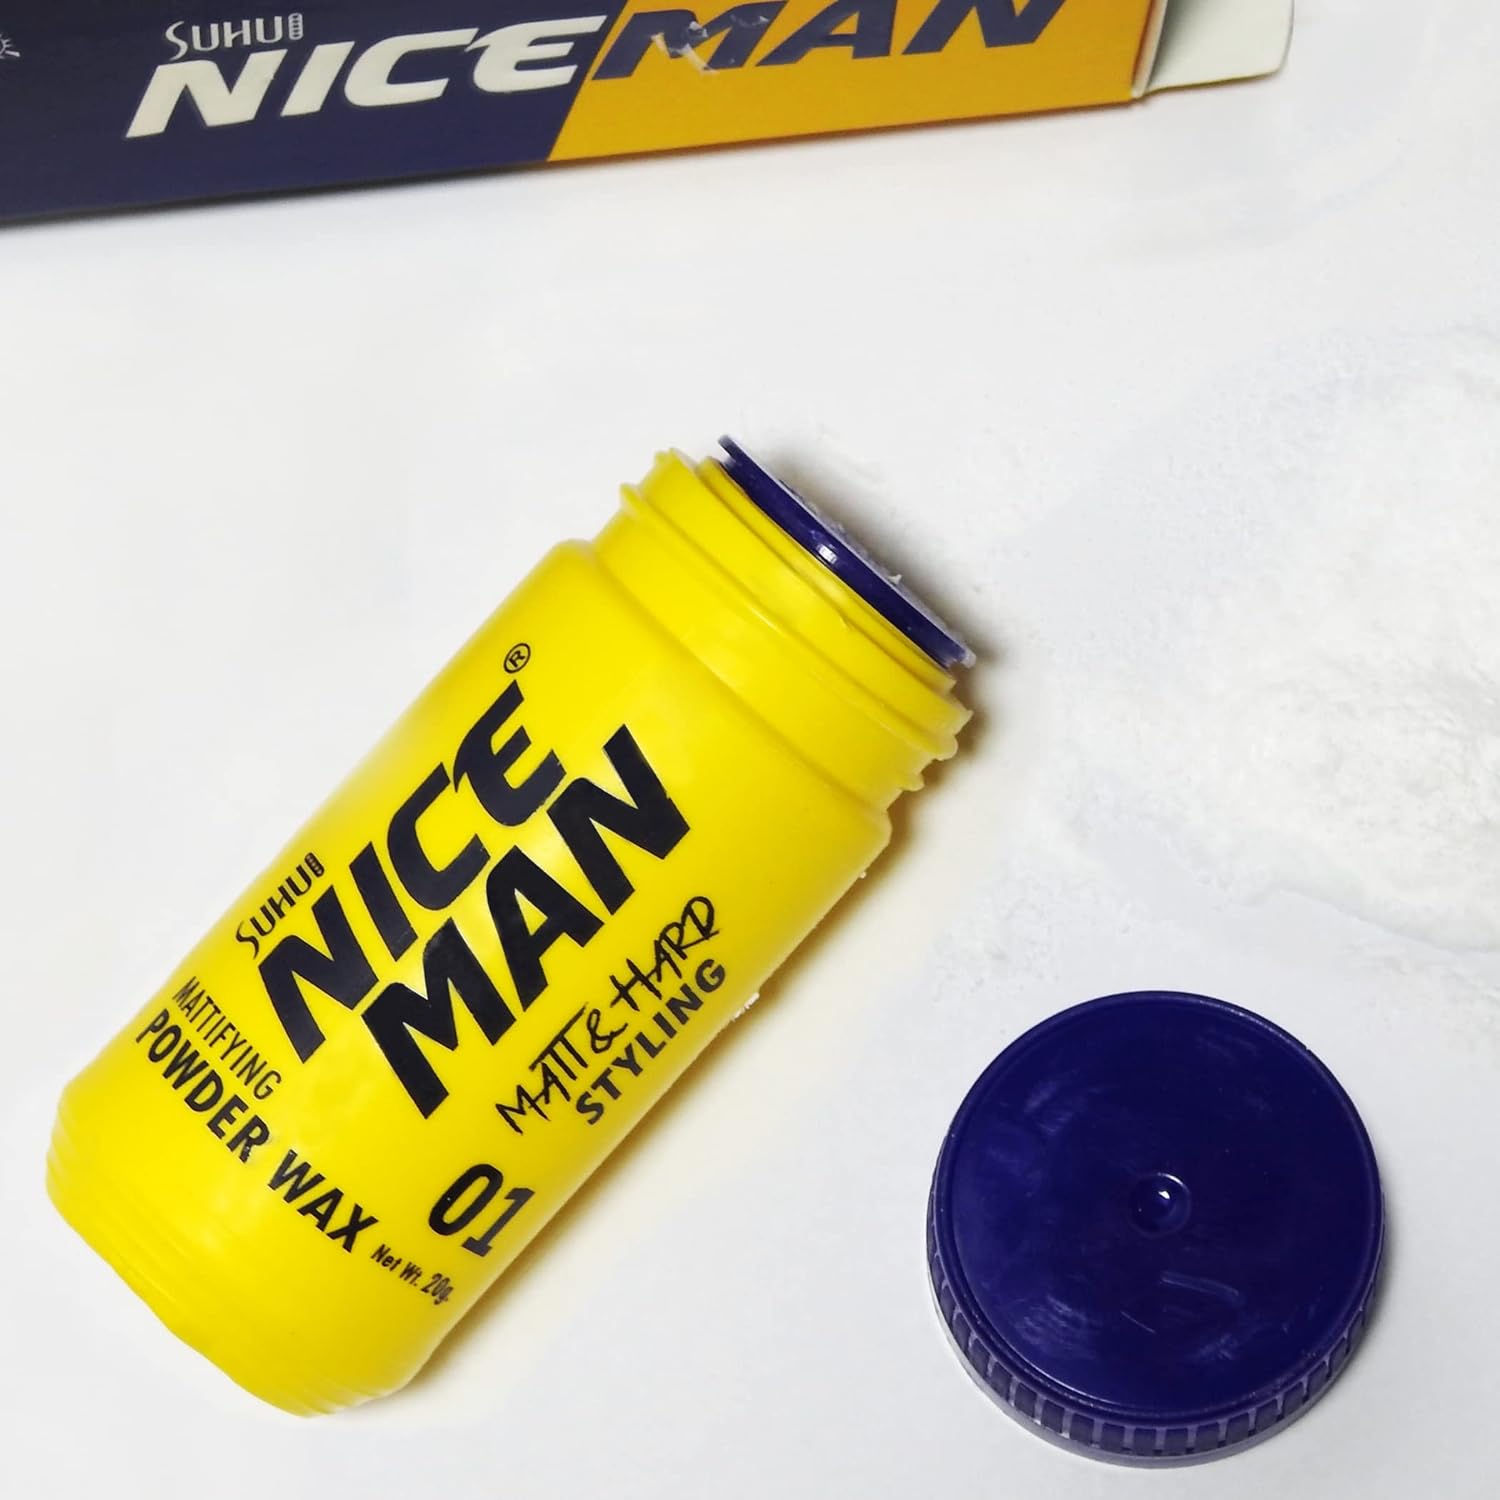 SUHU Style Art Hair Web wax 100ml with Niceman Mattifying Hair powder Wax 20g Combo (2 Items in the set)